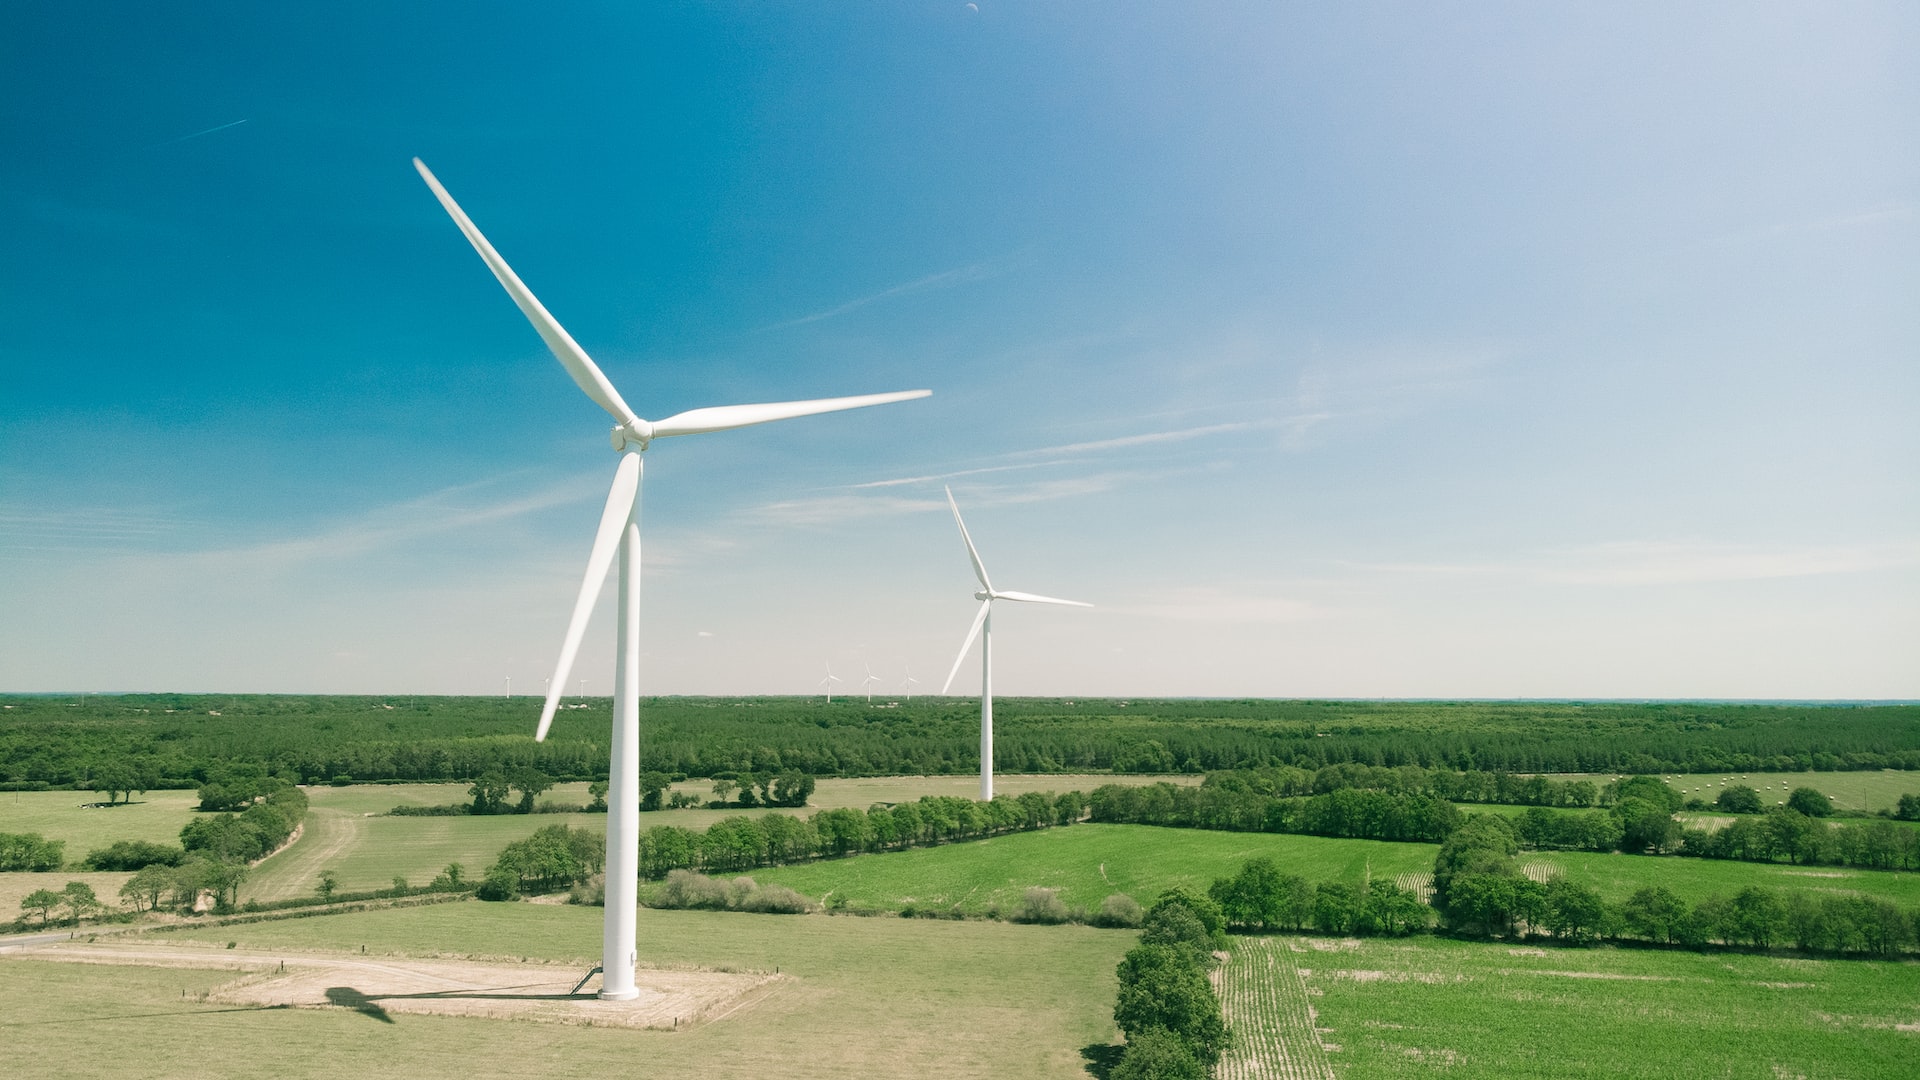 Big wind turbine on a green field, producing renewable energy.